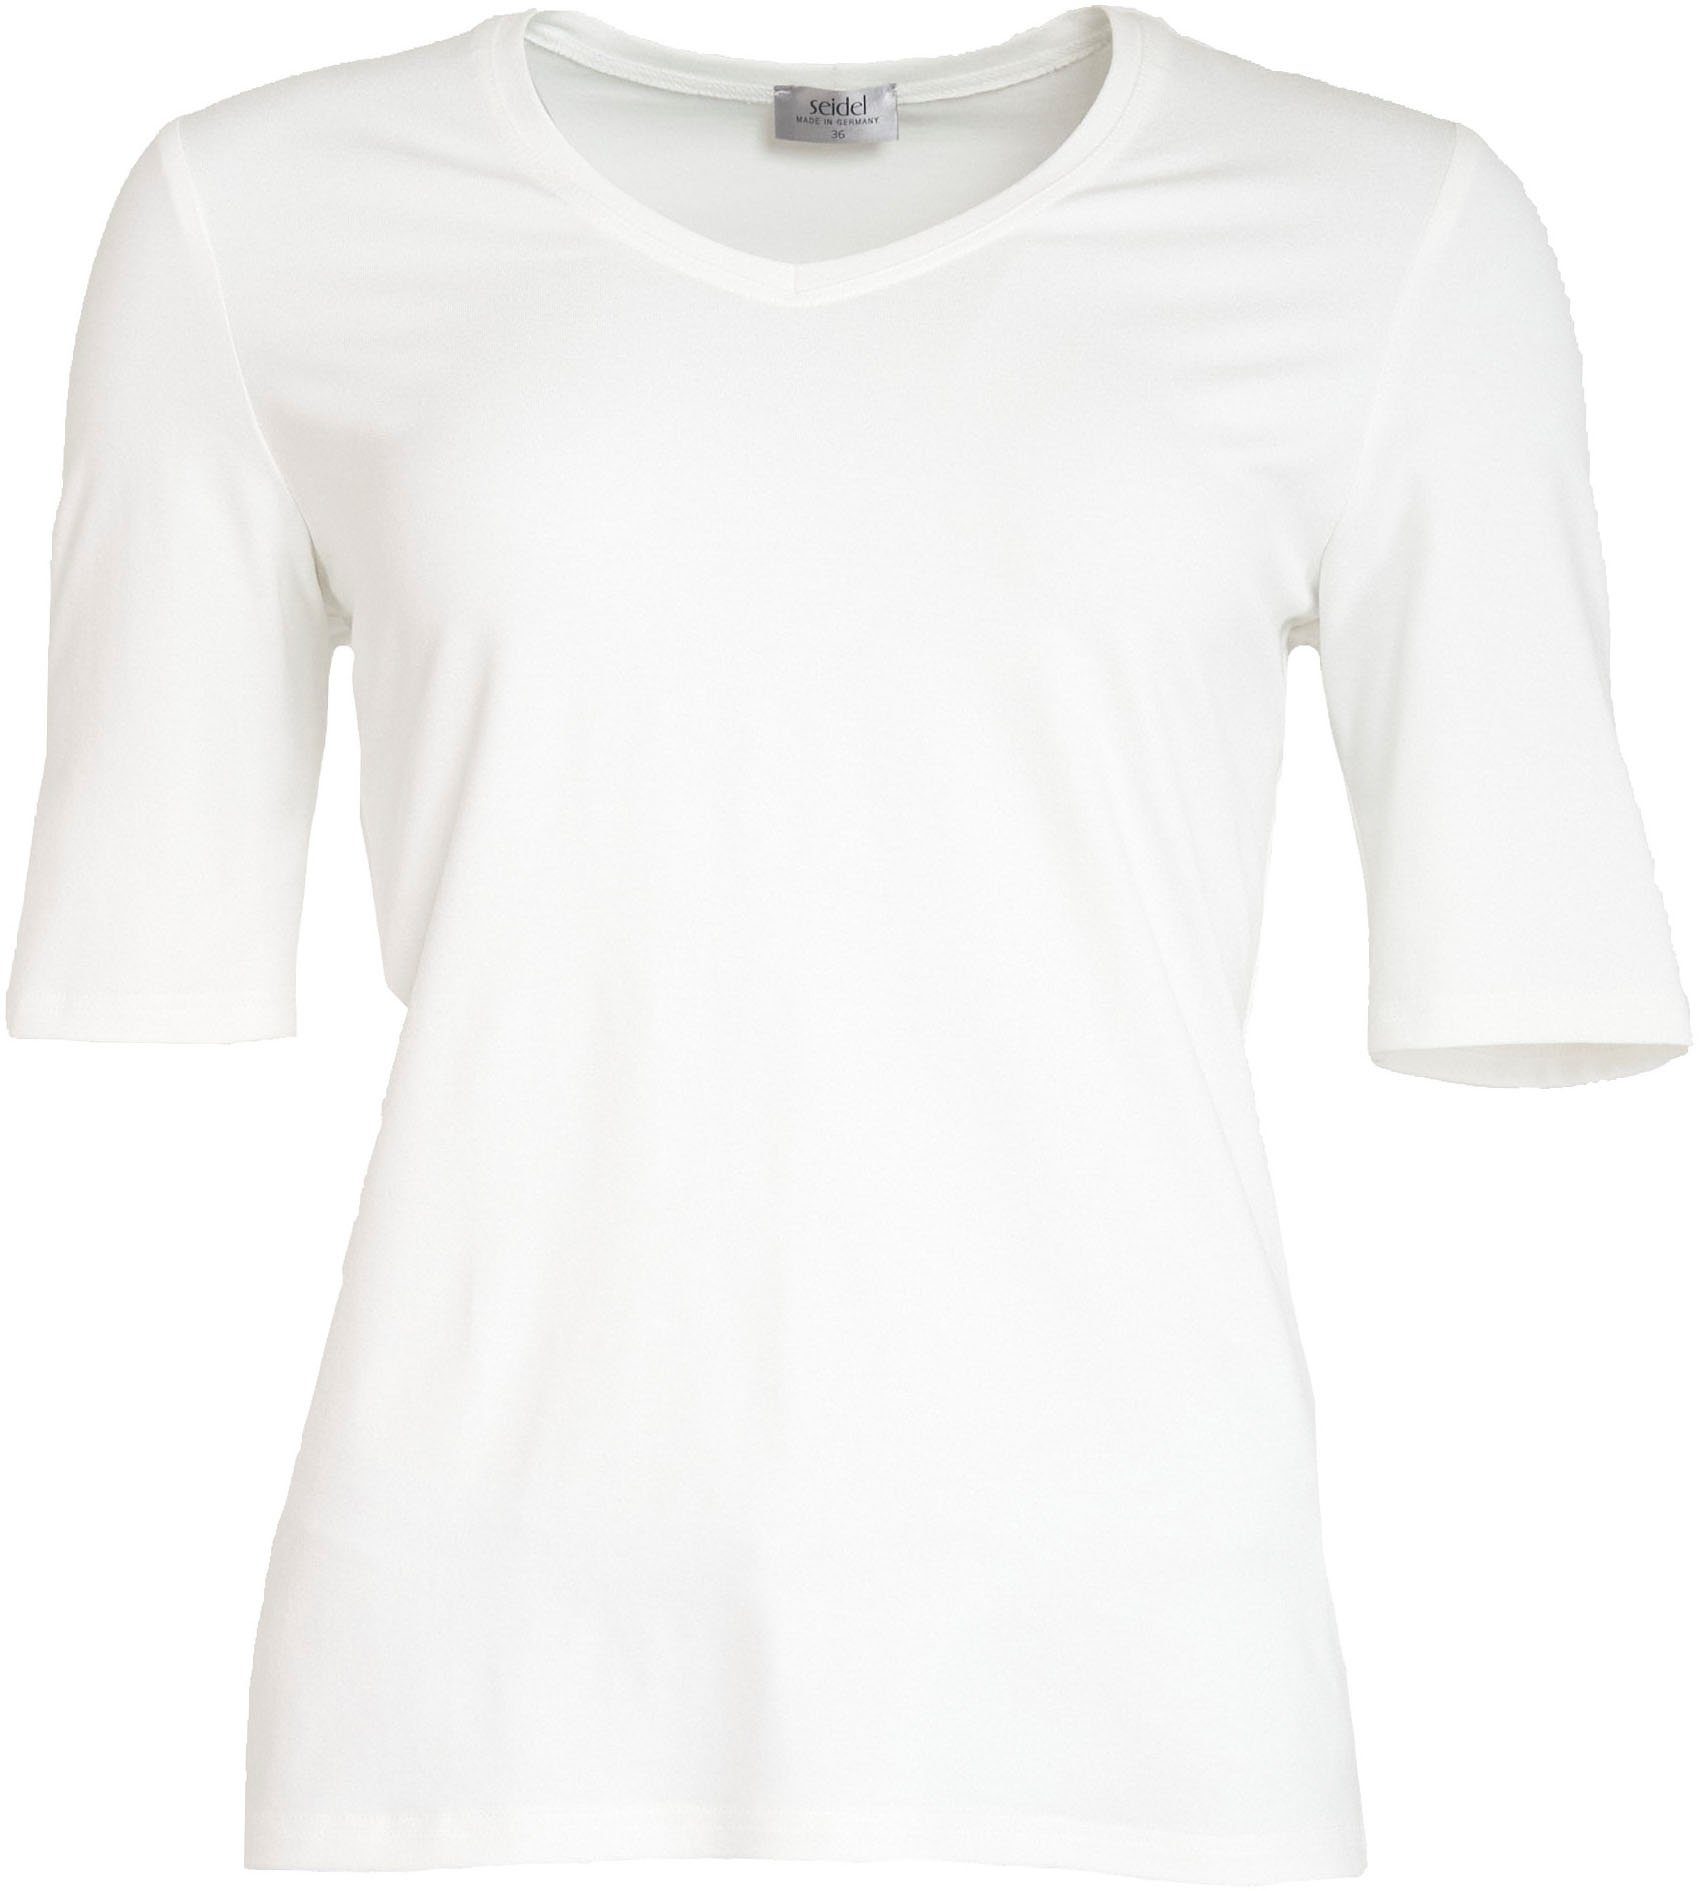 Seidel Moden V-Shirt mit softem aus Material, GERMANY IN offwhite MADE Halbarm